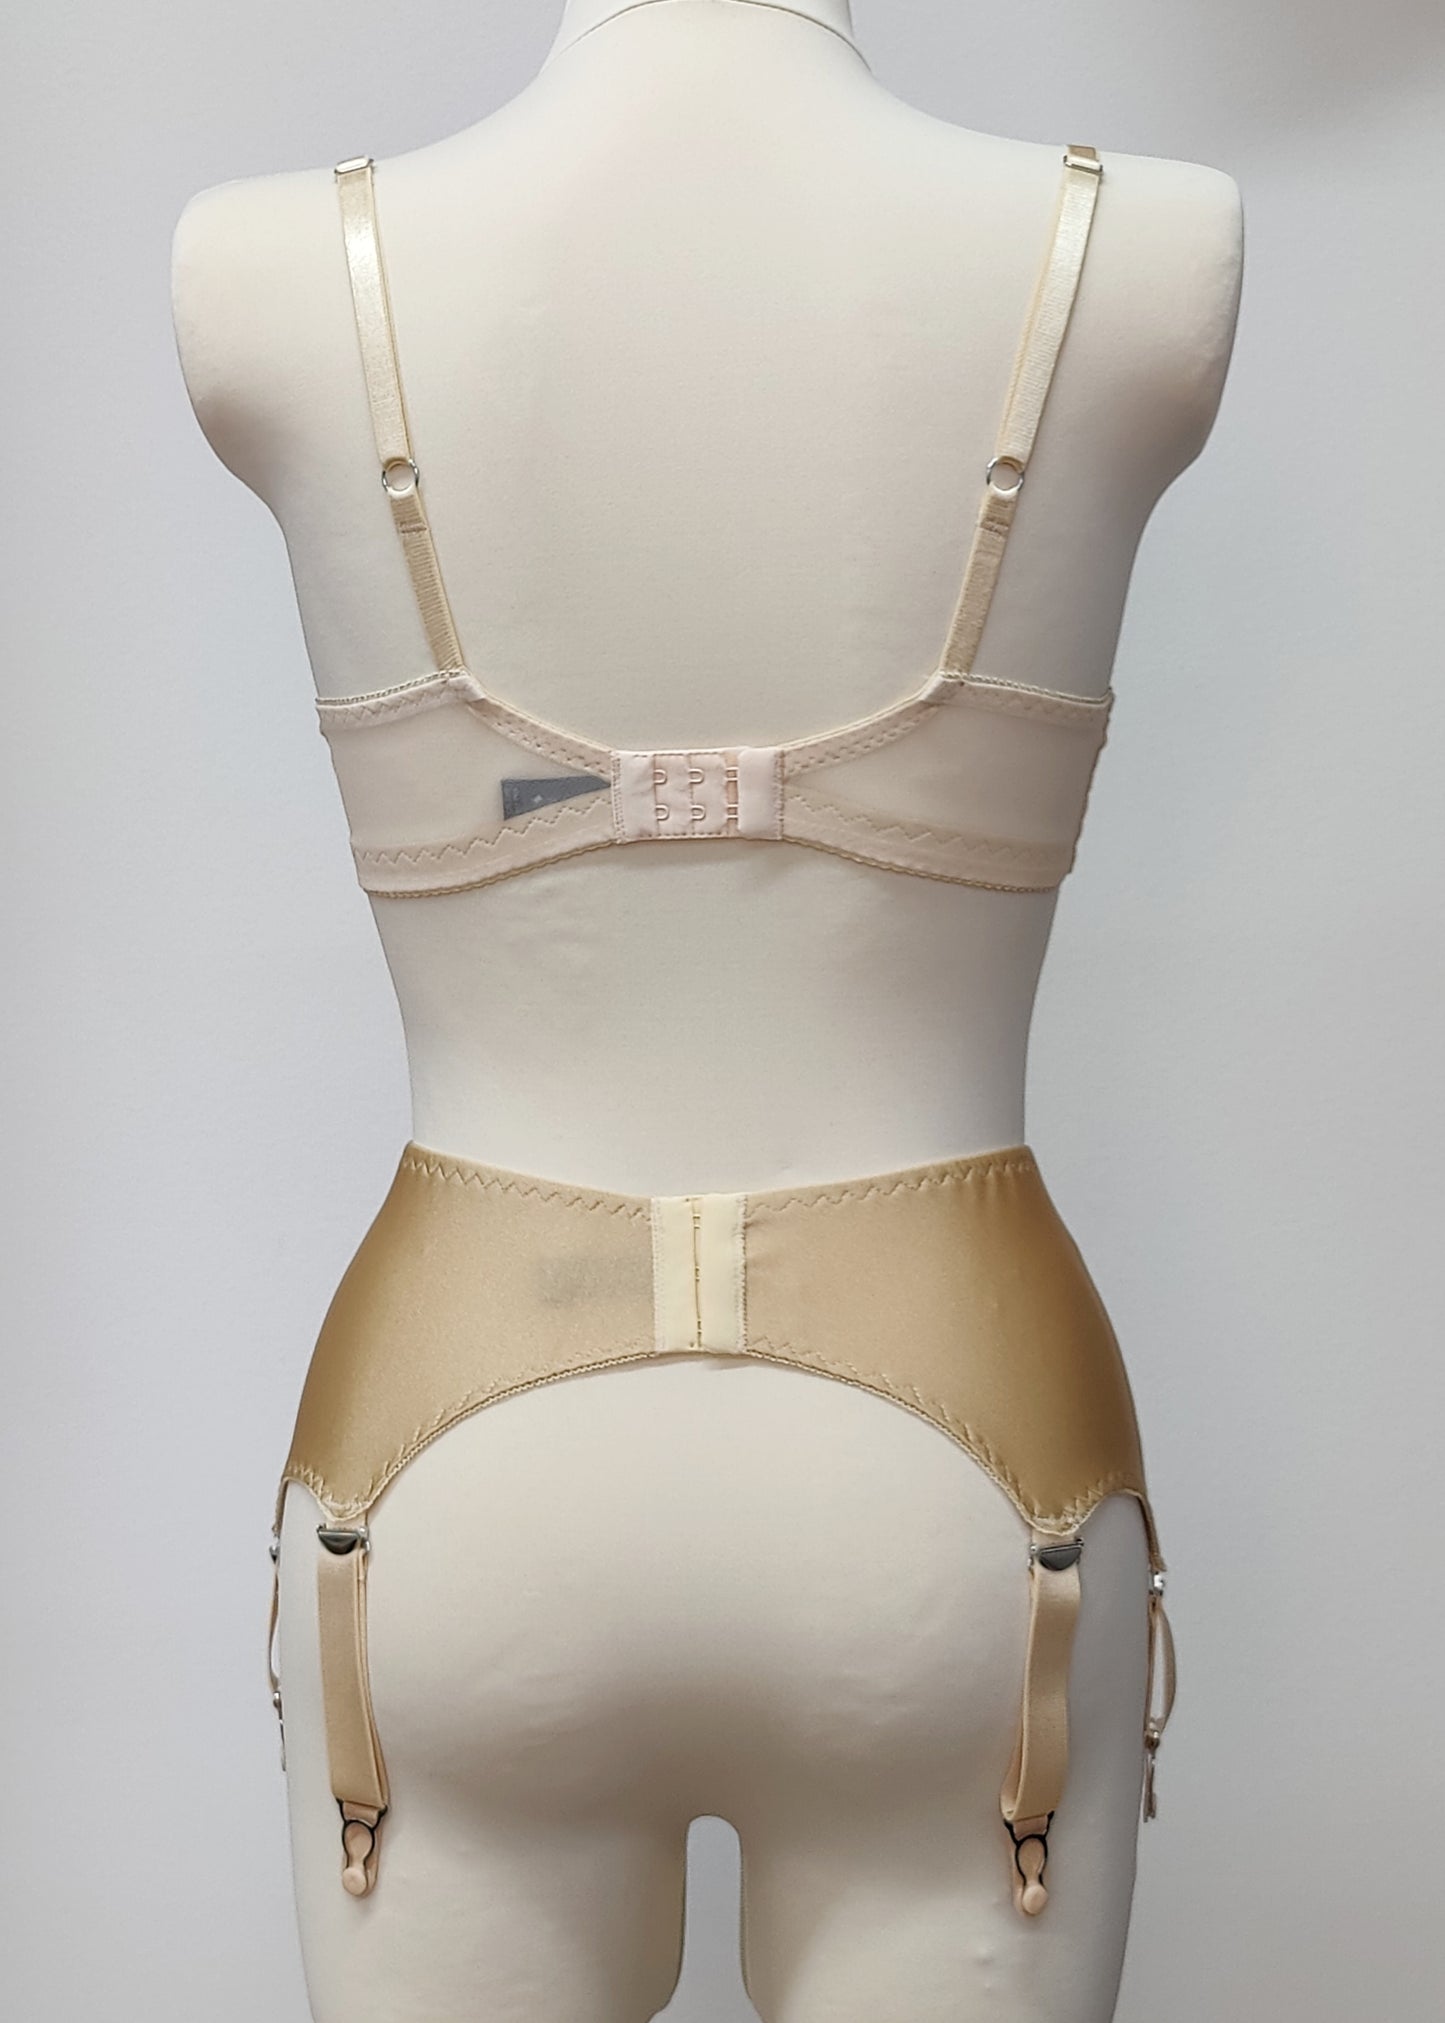 beige 6 strap garter belt with side lace panels, back view